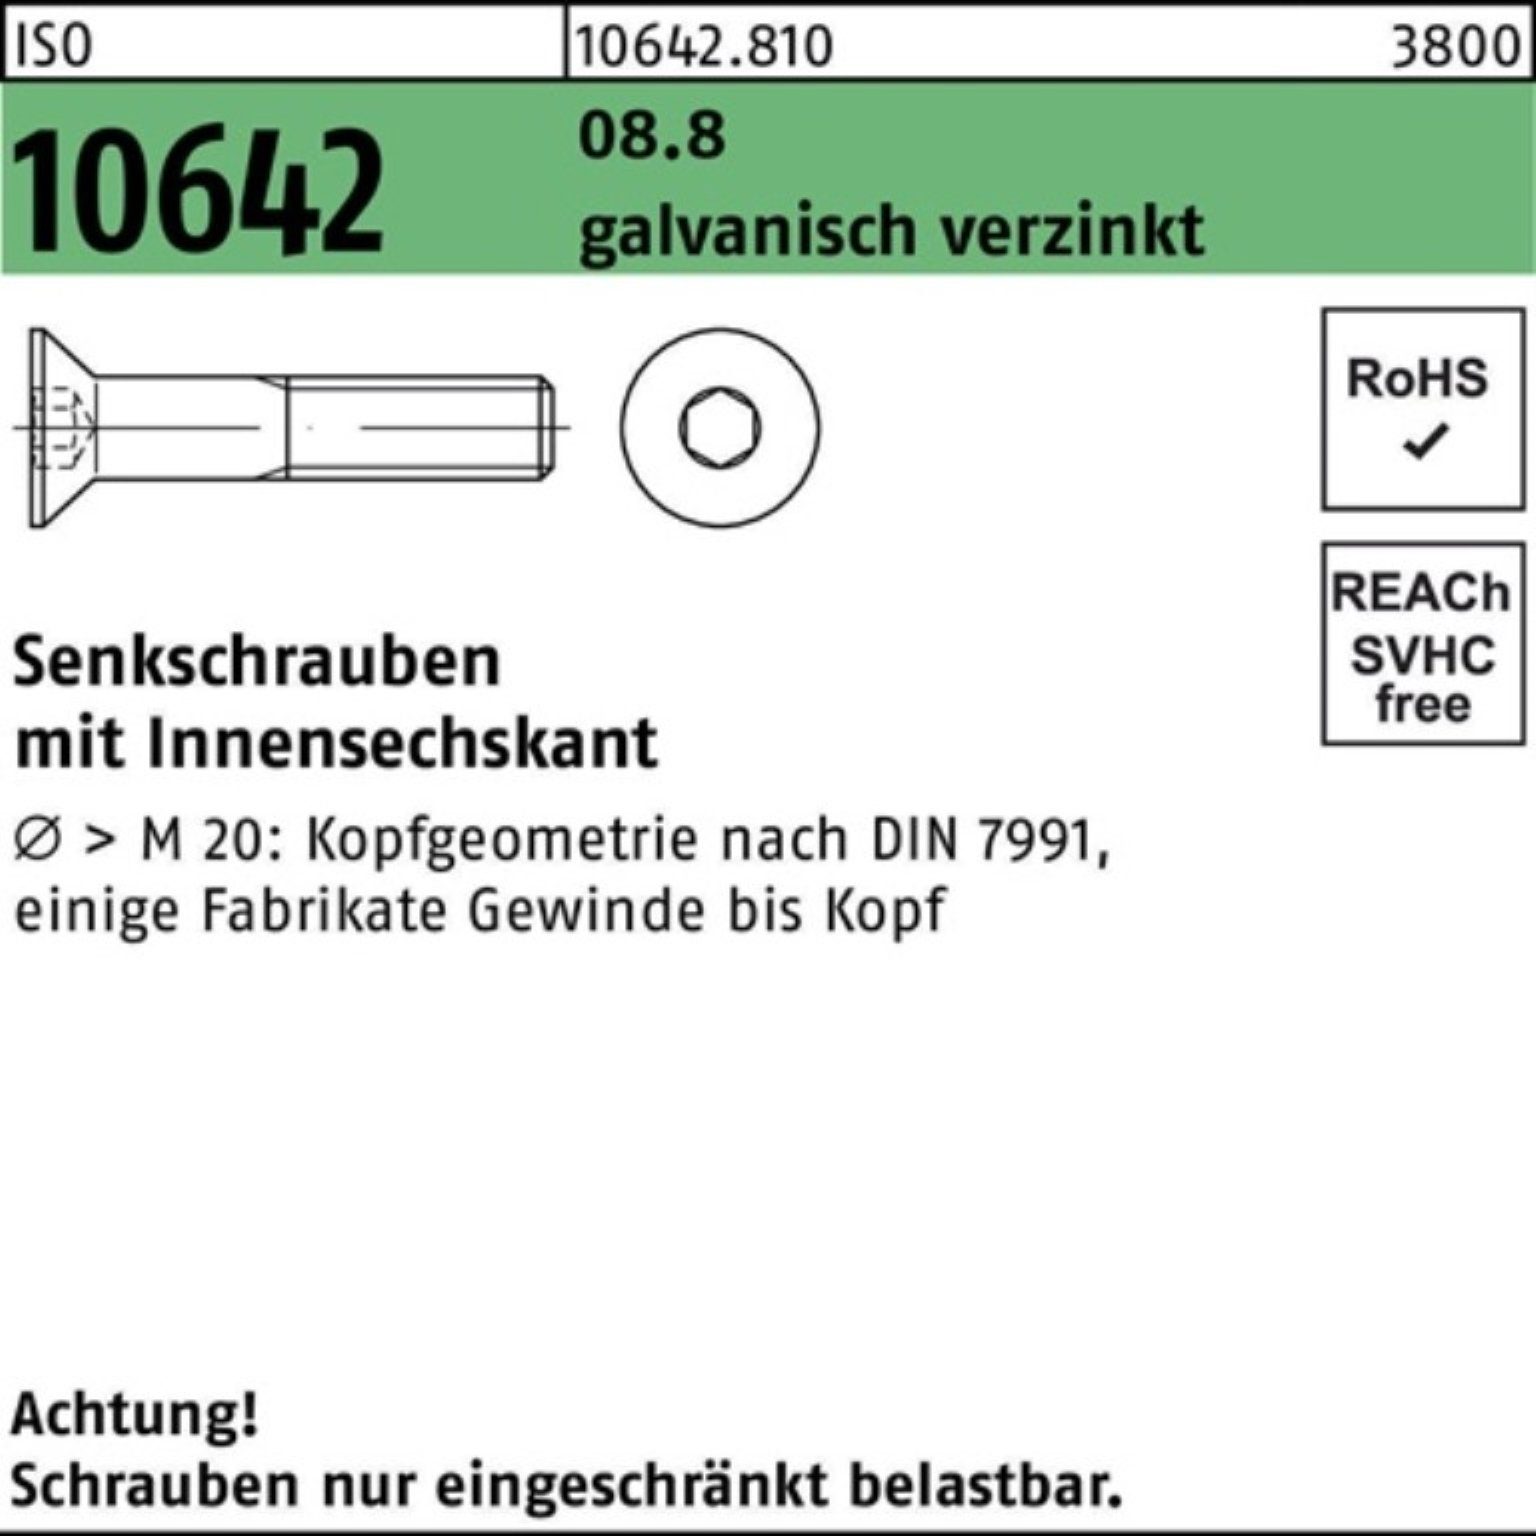 Pack 10642 S Reyher Innen-6kt 8 galv.verz. 500 Senkschraube 8.8 Senkschraube M5x 500er ISO